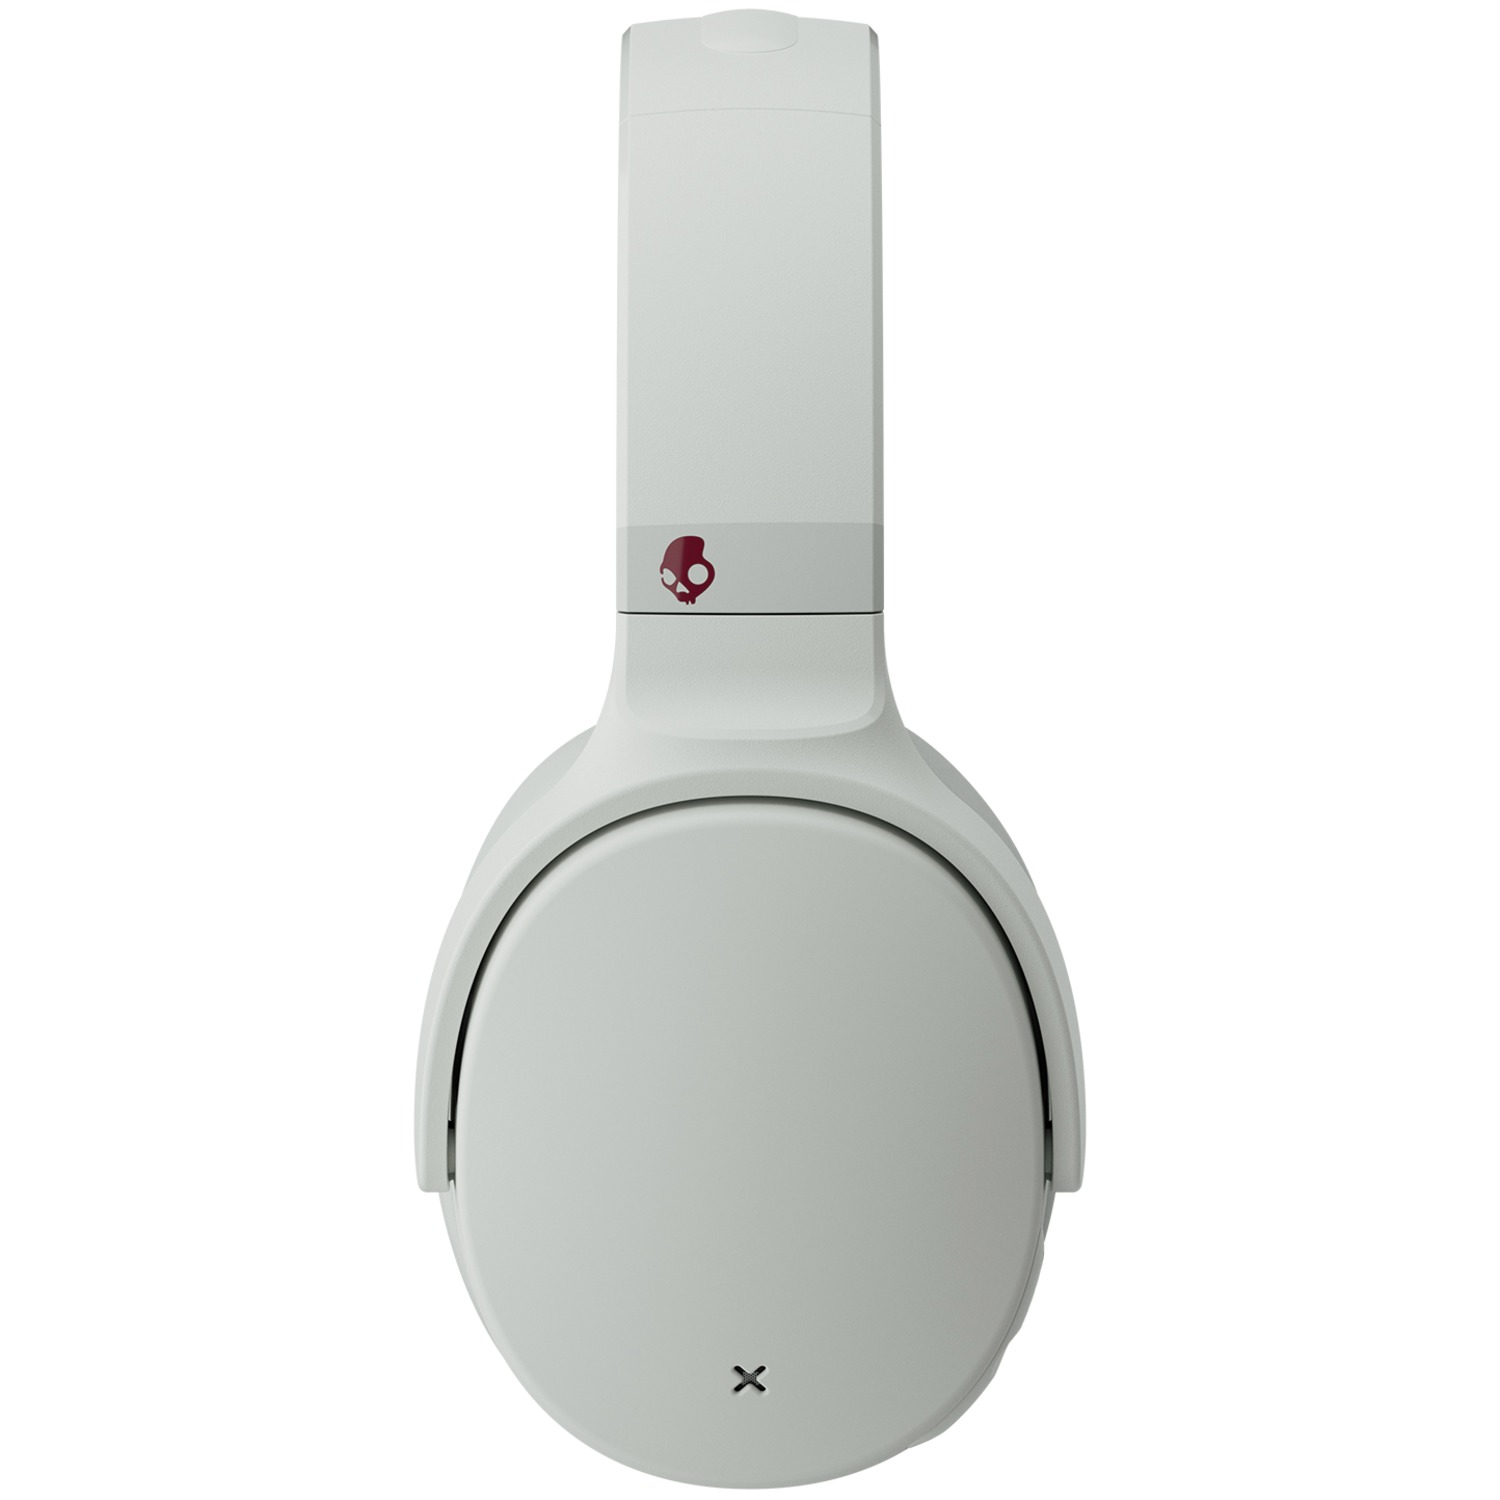 Skullcandy Venue on-ear Active Noise Canceling Bluetooth Wireless Headphones in Gray & Crimson - image 3 of 8